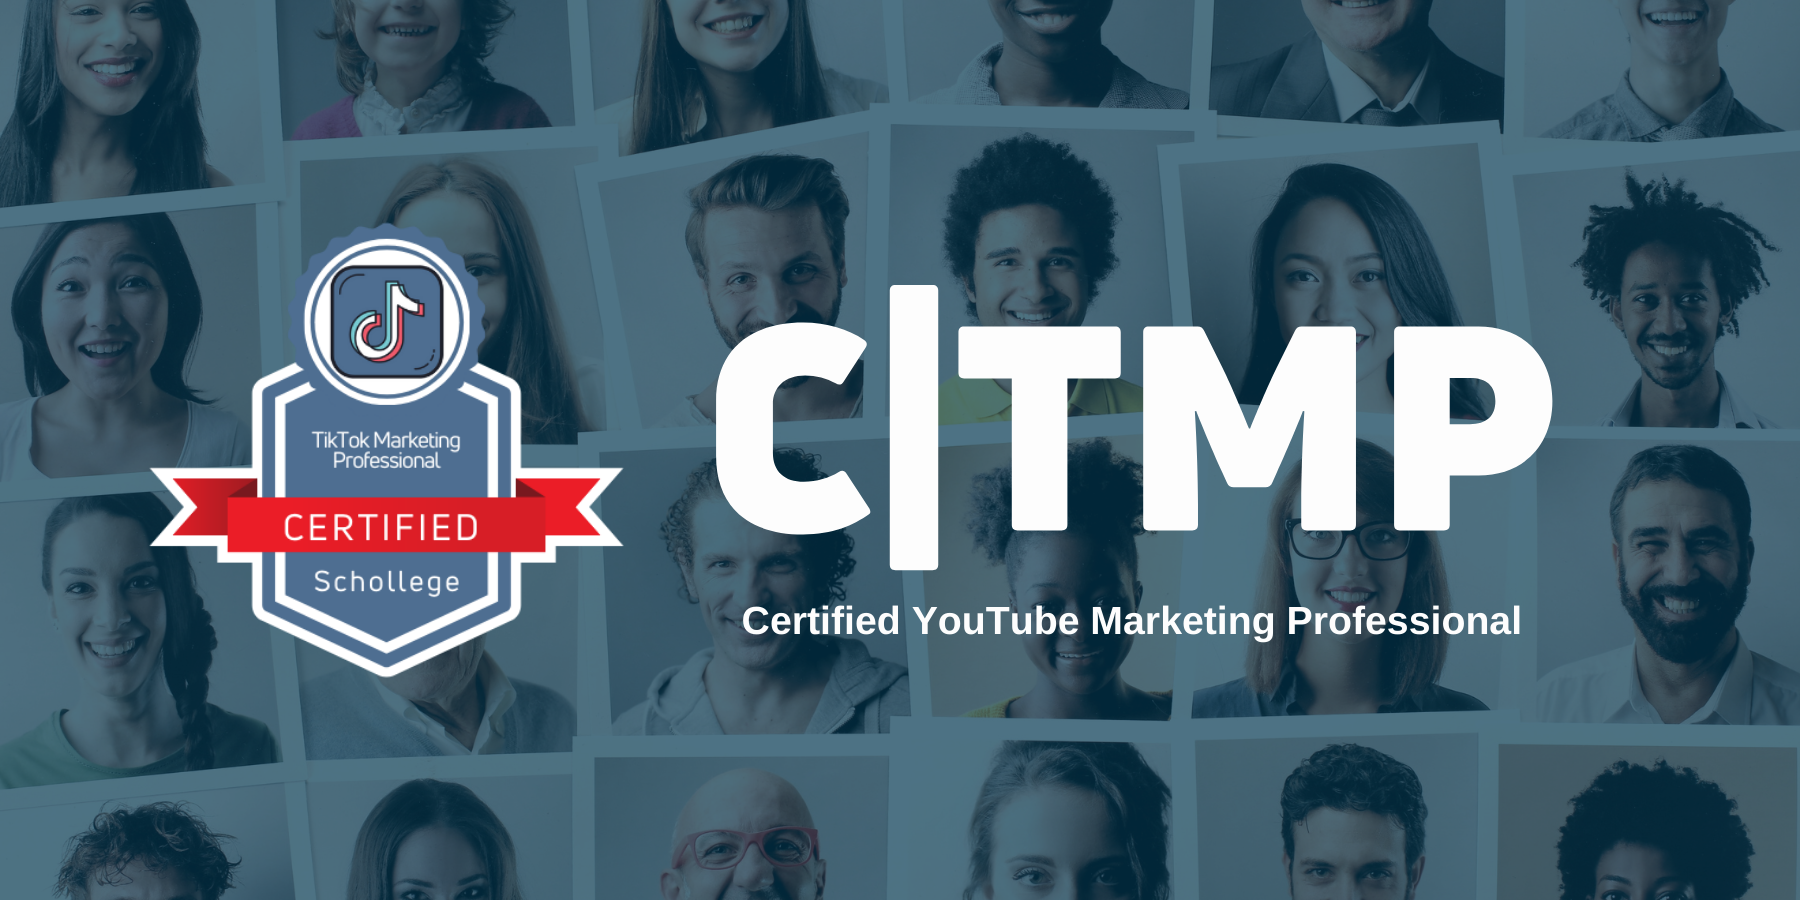 Certified TikTok Marketing Professional - Schollege